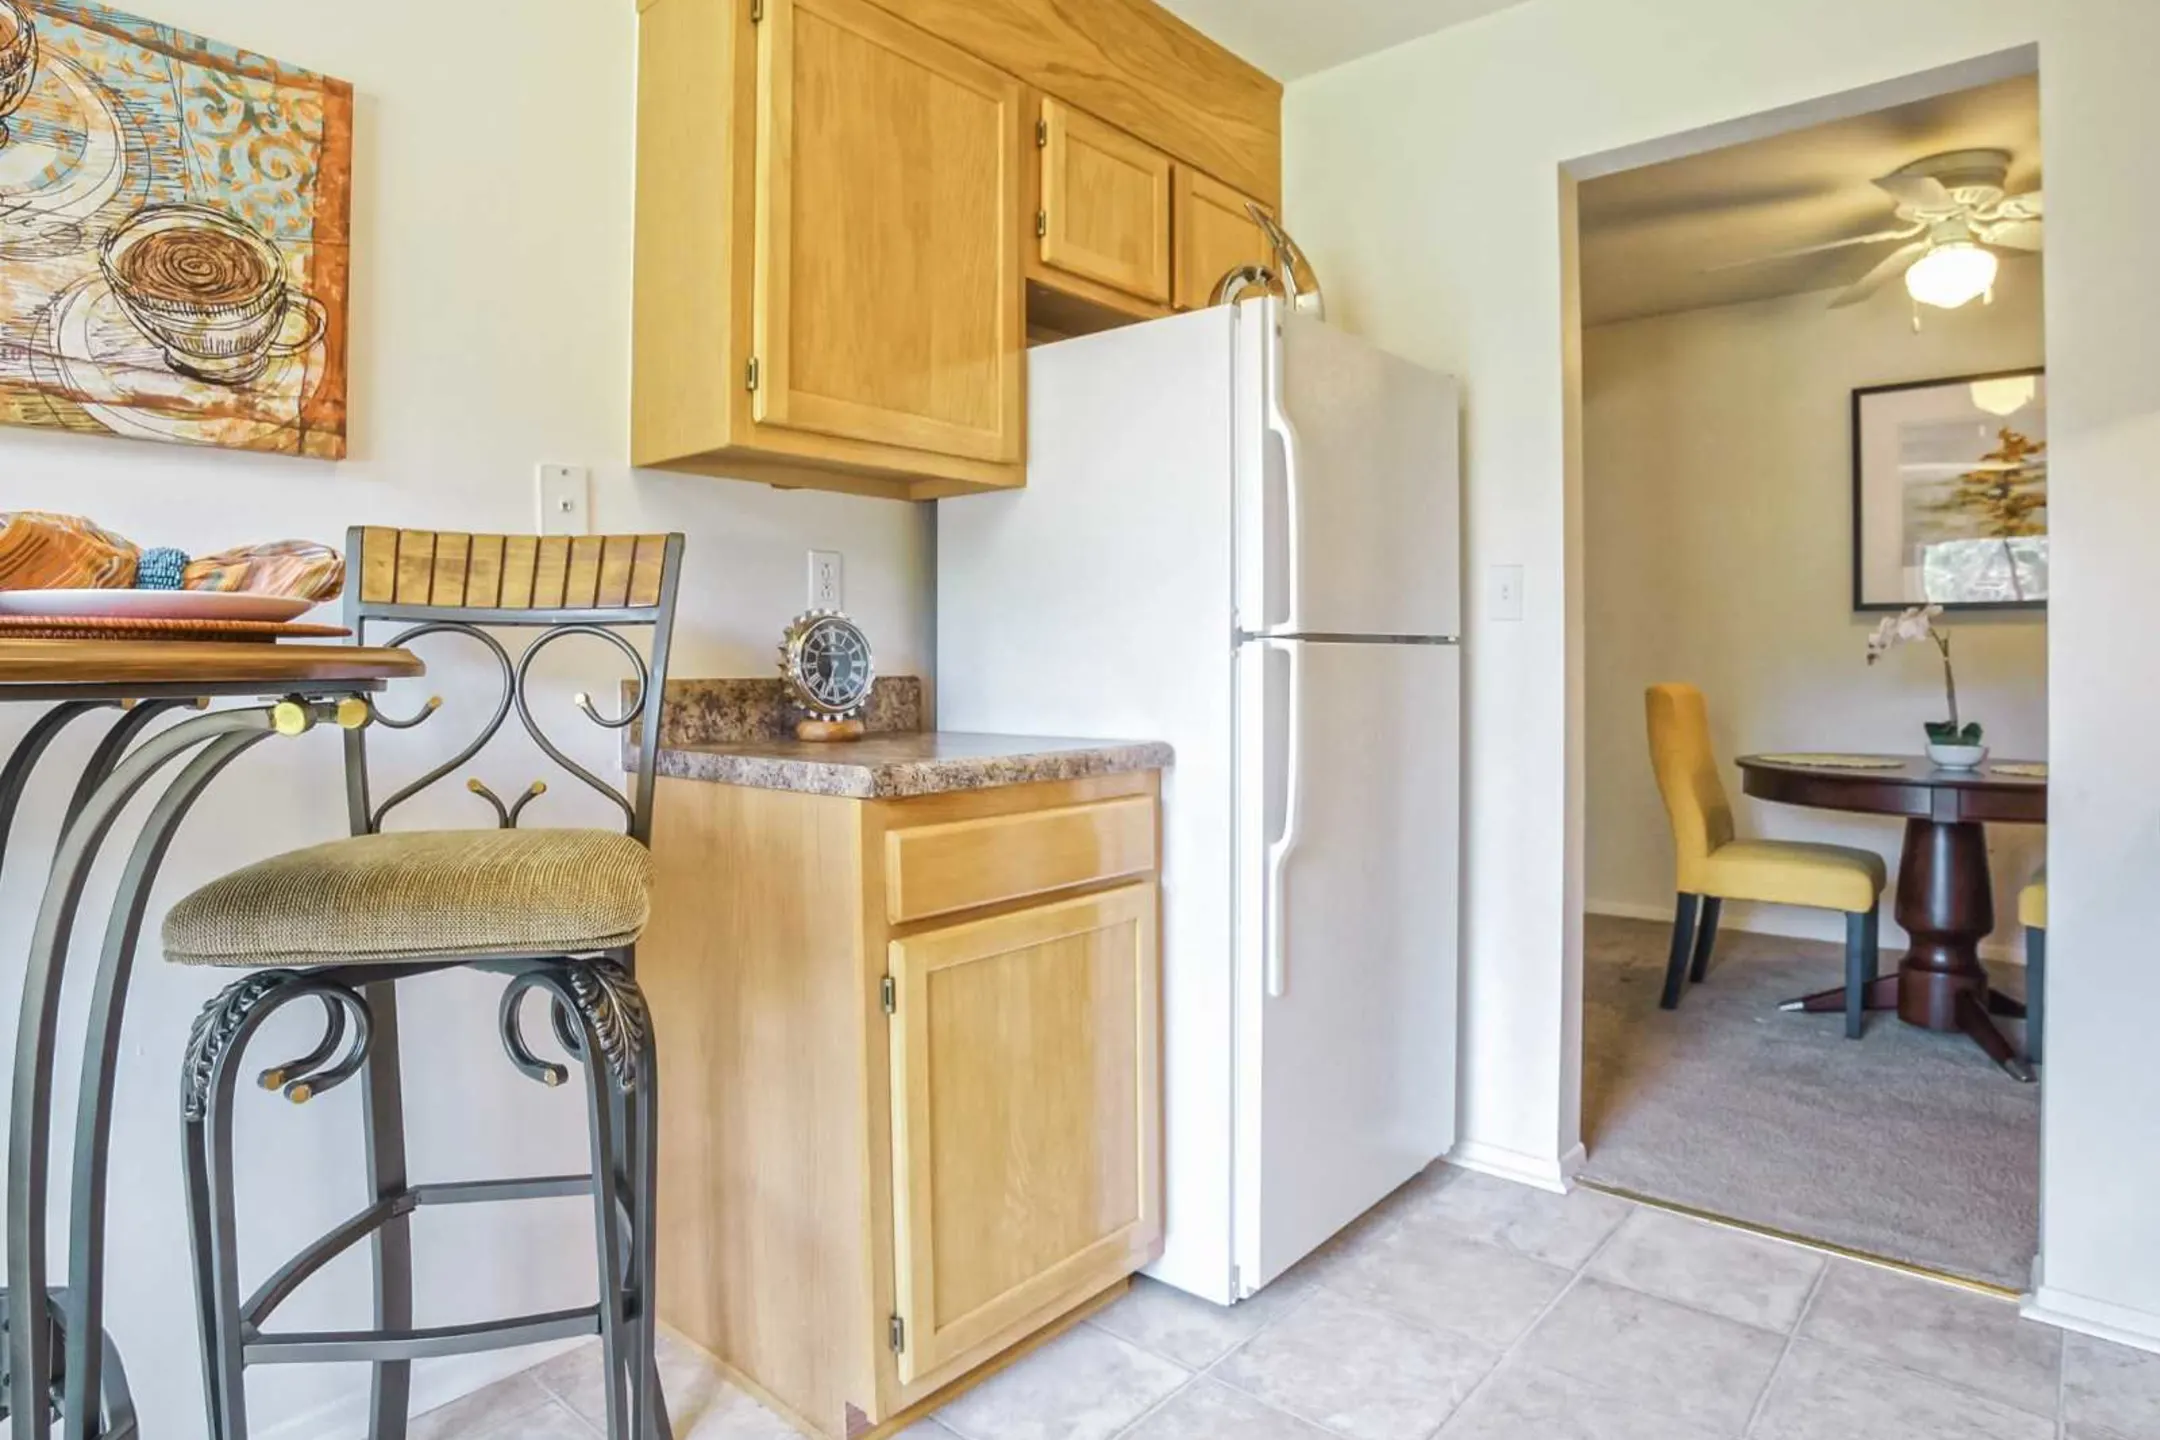 Kitchen - Pebble Creek Apartment Homes - Roanoke, VA